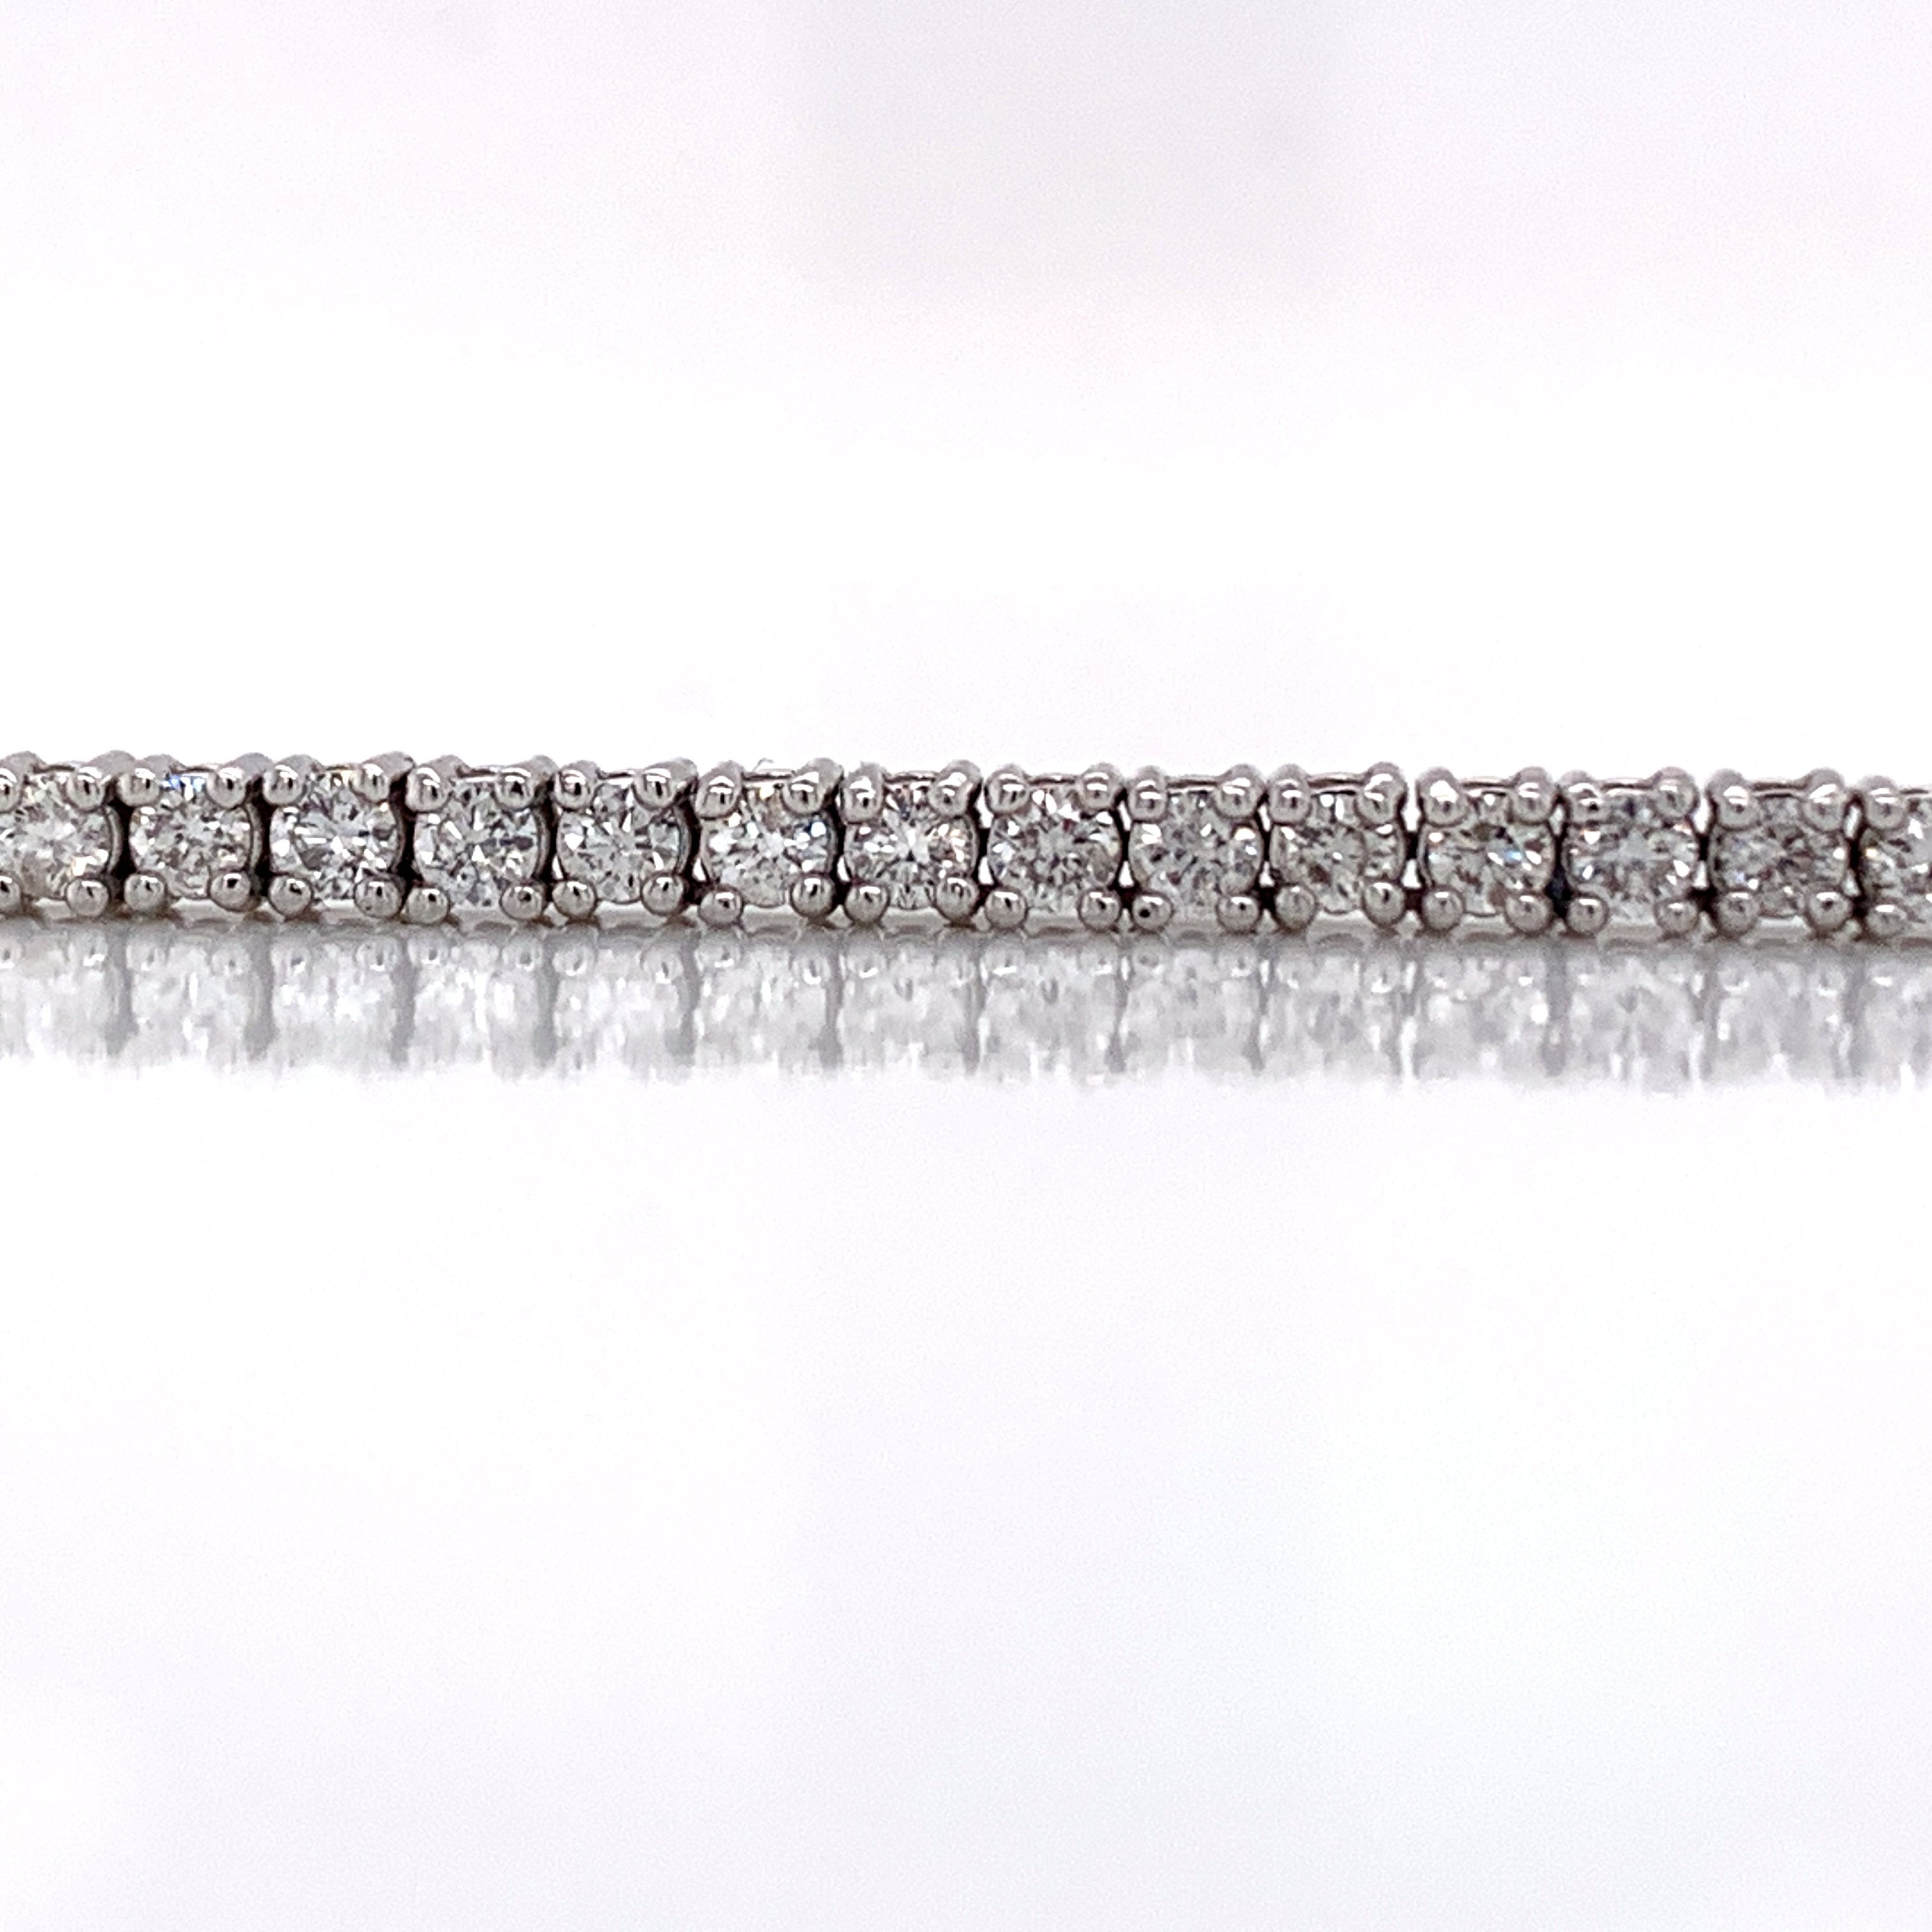 1.75CT Diamond Tennis Bracelet in 14K White Gold - White Carat Diamonds 